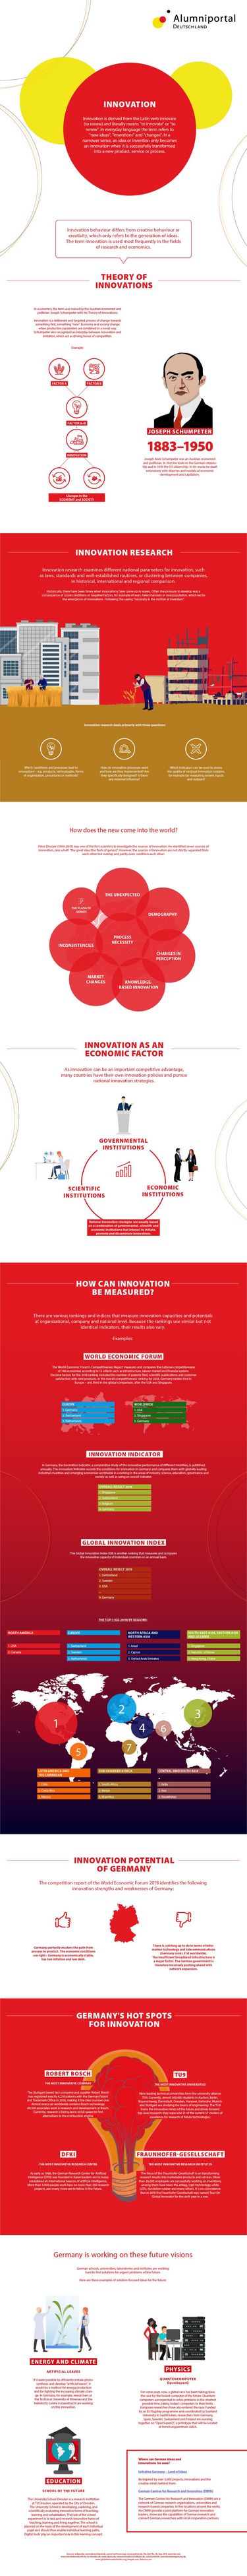 Infografic Innovation